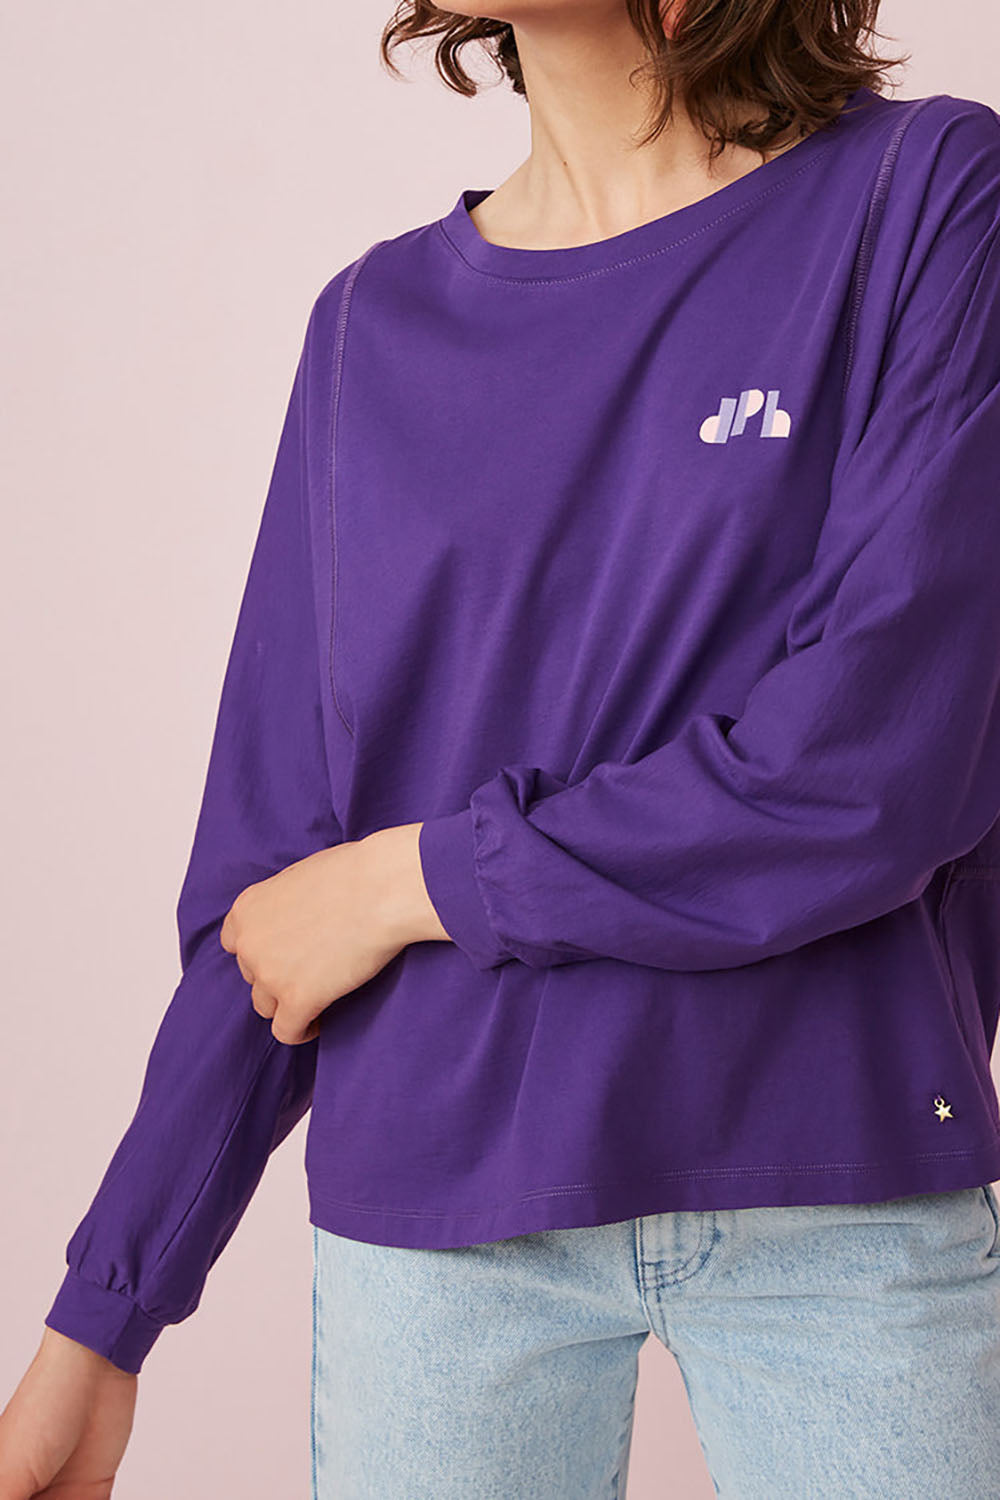 tee shirt frizon violet